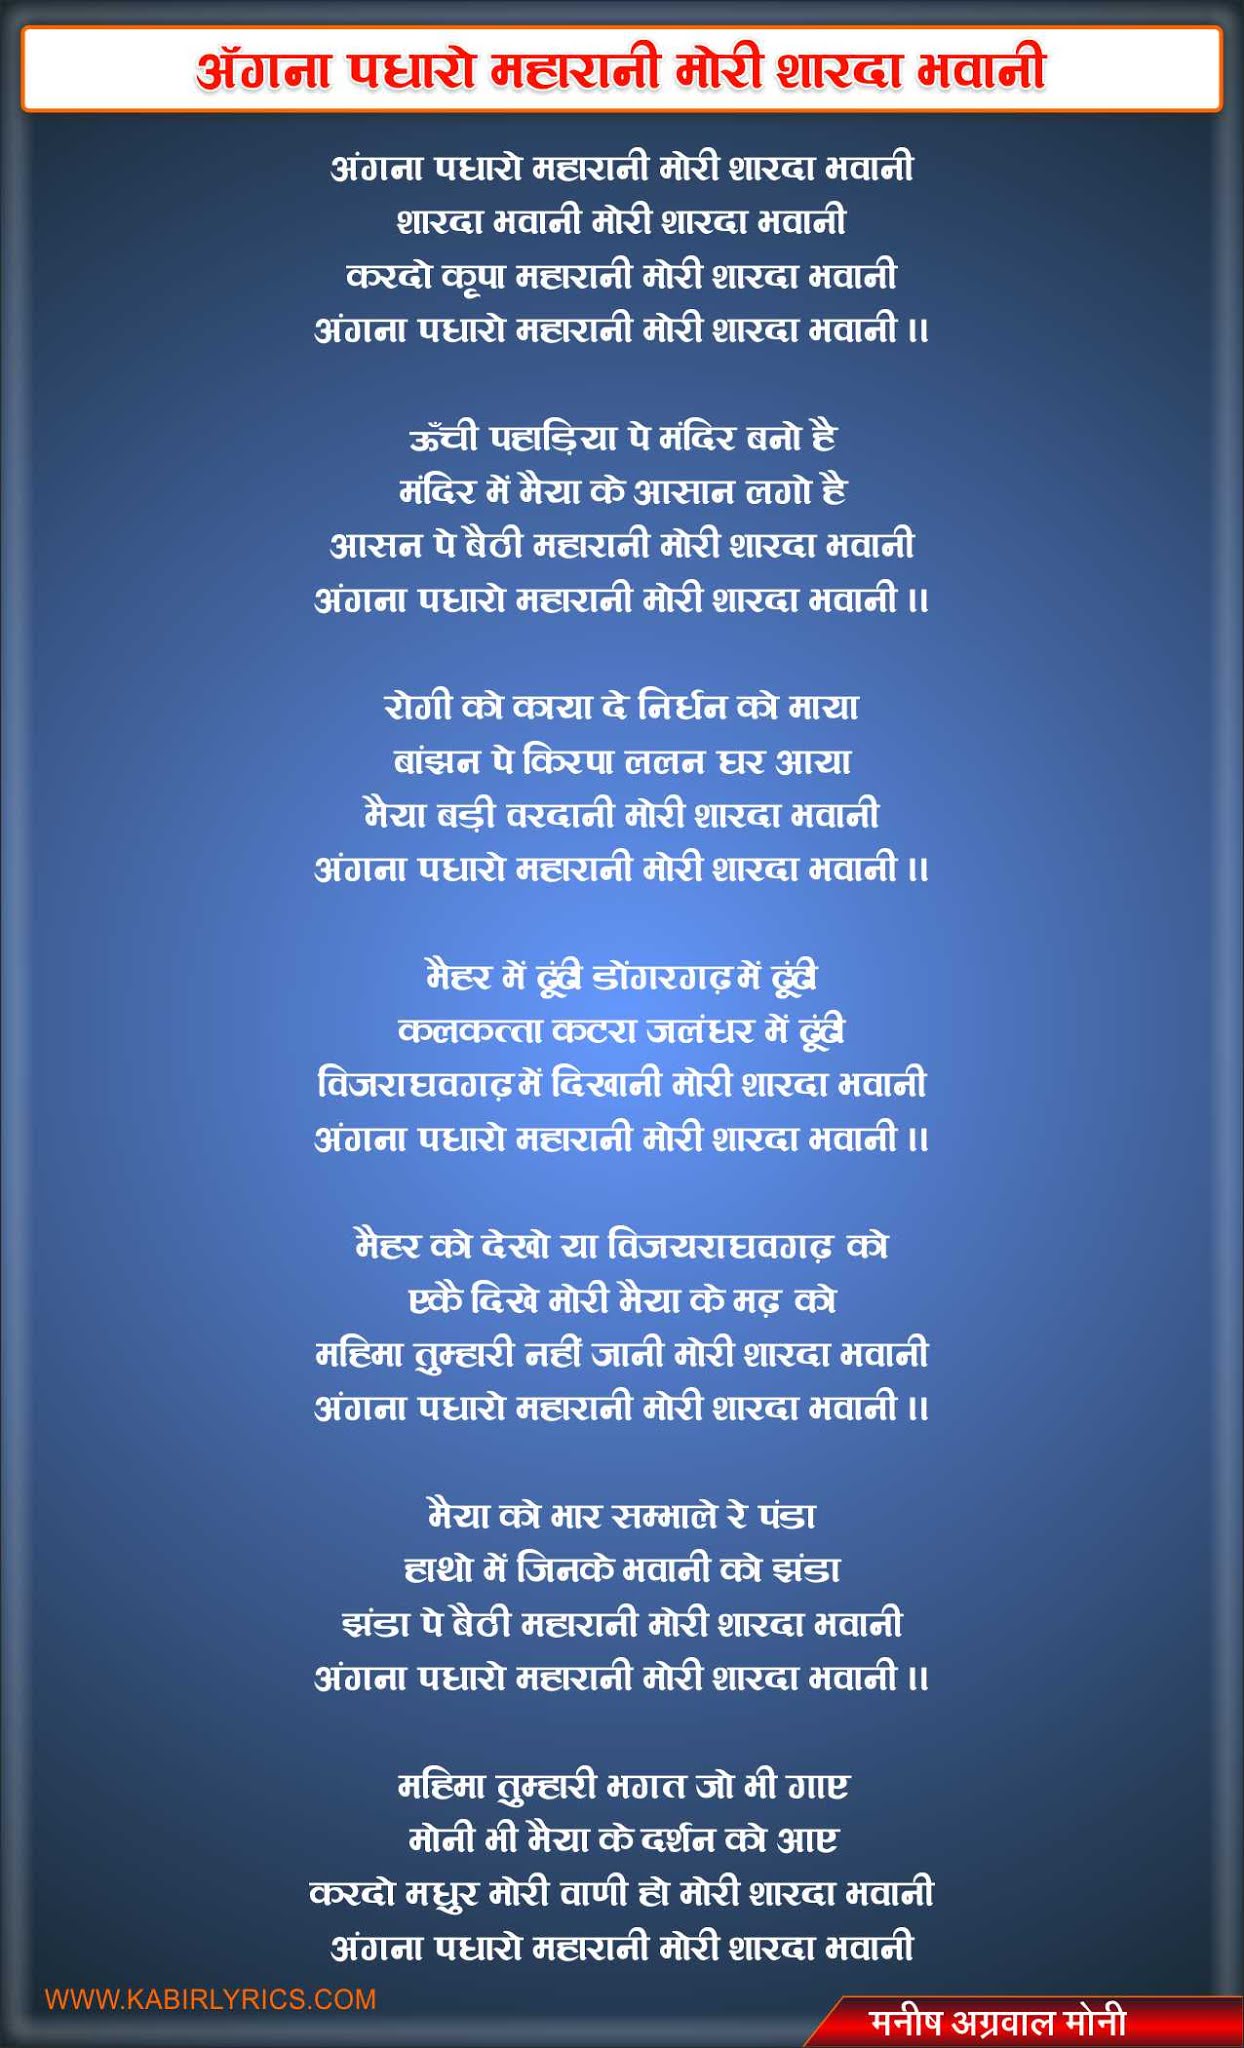 à¤… à¤—à¤¨ à¤ªà¤§ à¤° à¤®à¤¹ à¤° à¤¨ Angana Padharo Maharani Lyrics à¤•à¤¬ à¤° à¤² à¤° à¤• à¤¸ angana padharo maharani lyrics